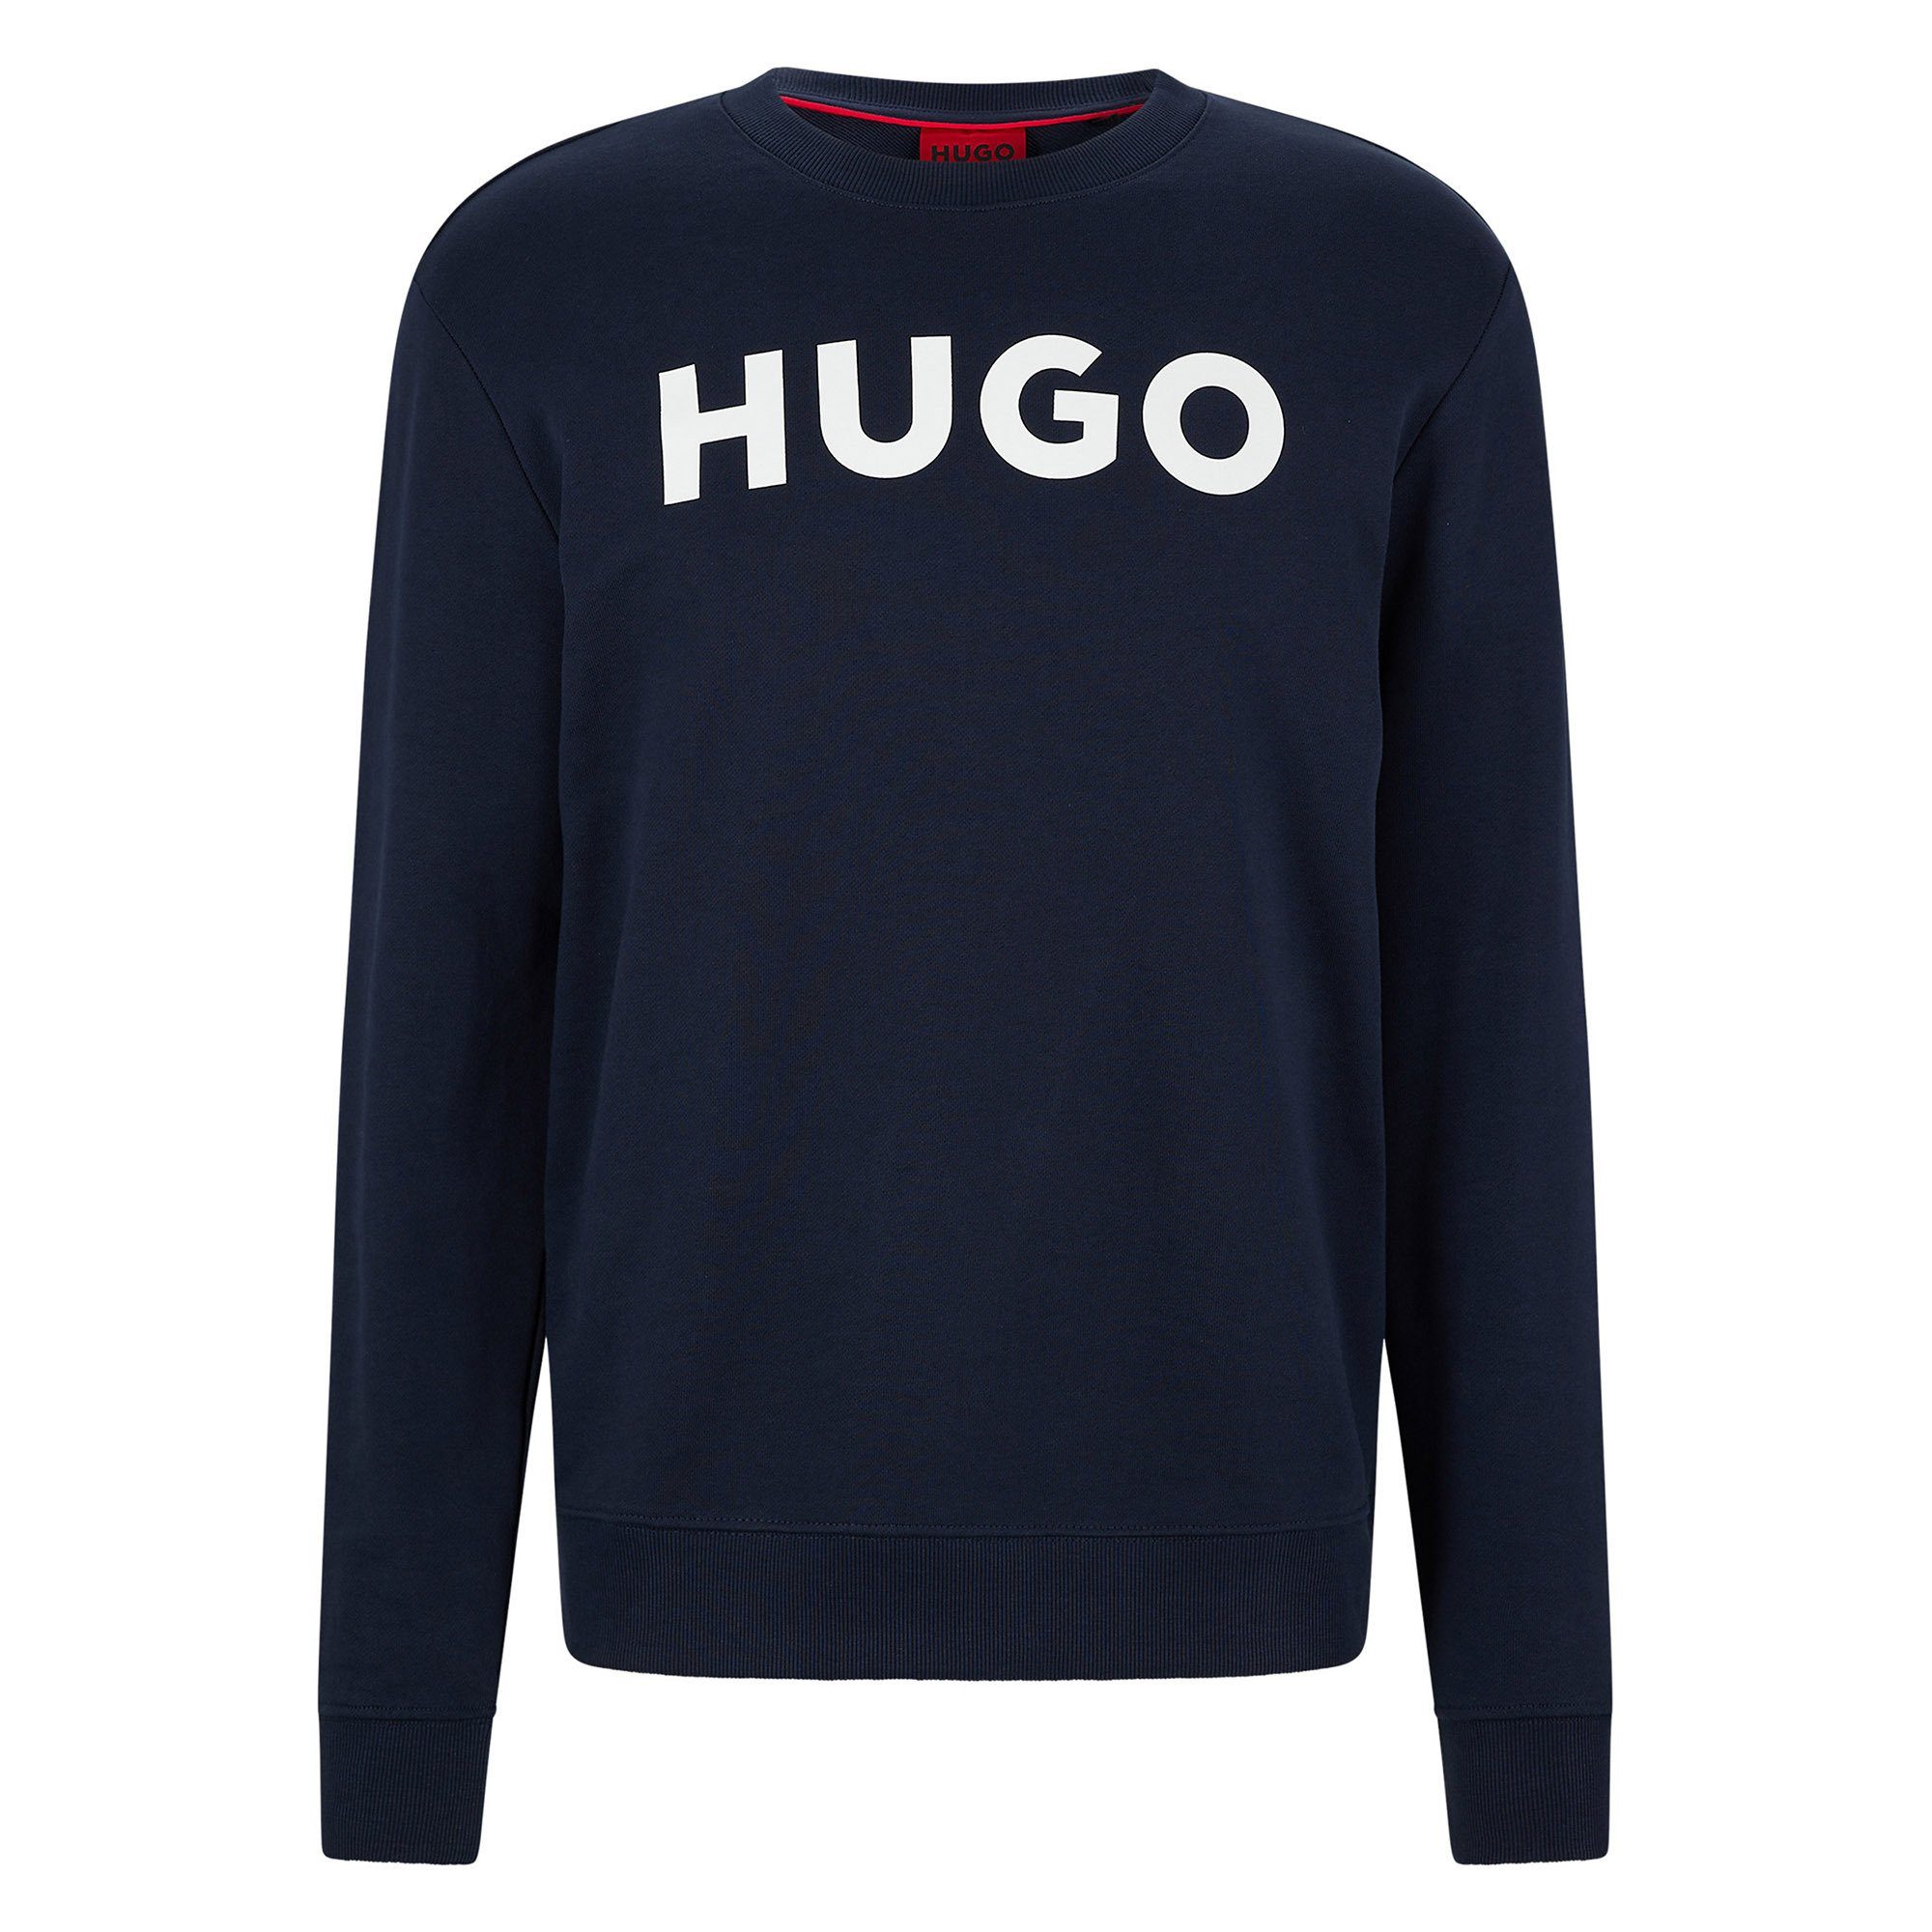 HUGO Sweatshirt Herren Sweater - DEM, Sweatshirt, Rundhals, French Dunkelblau